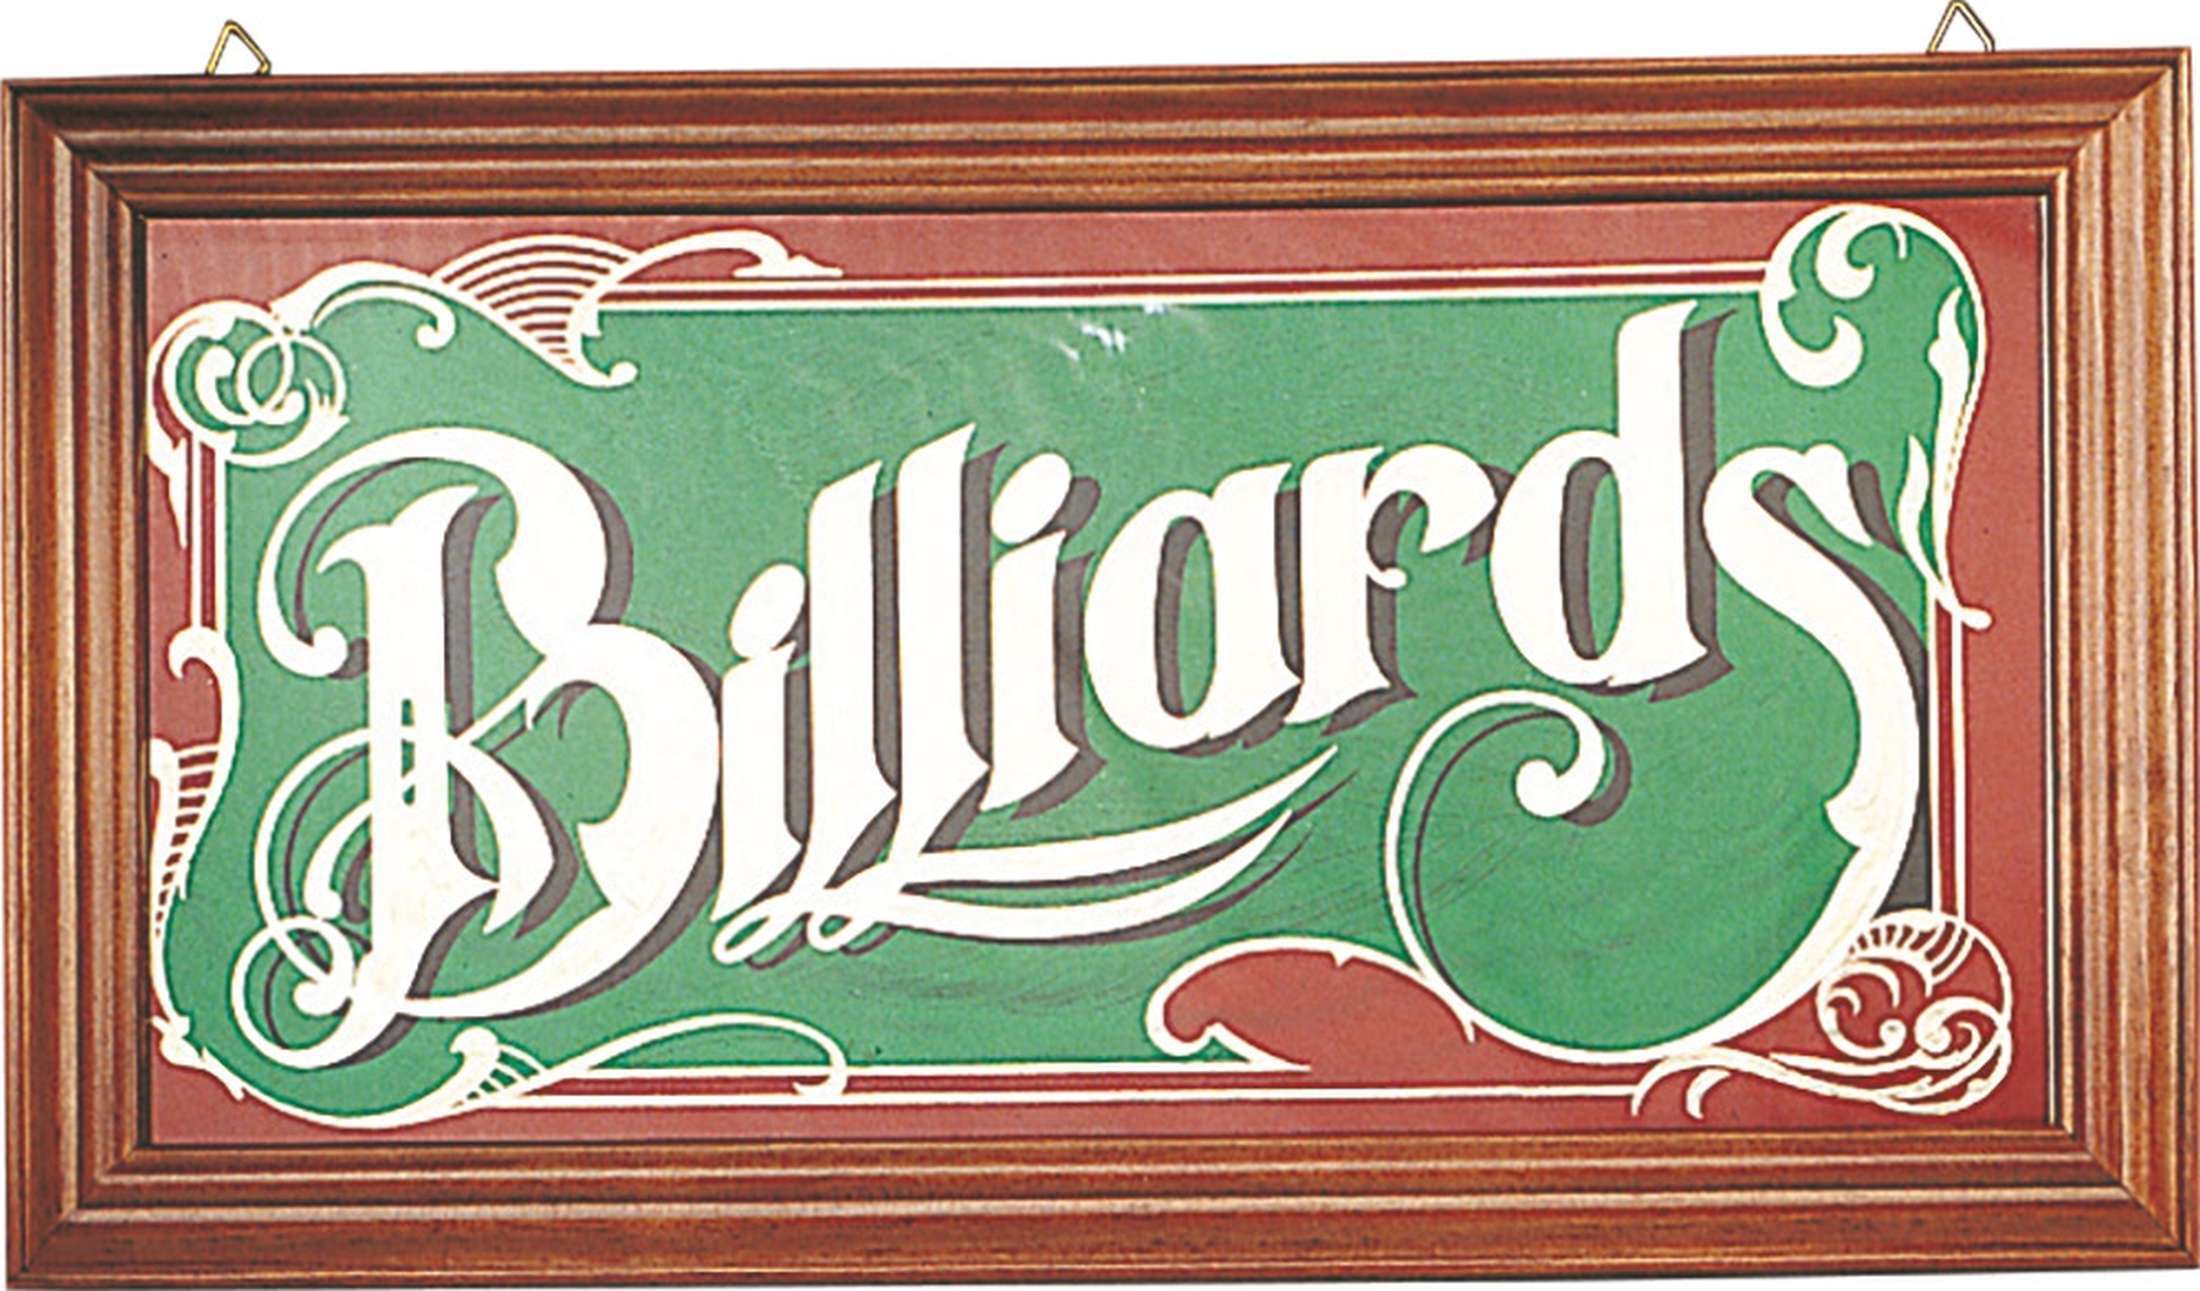 Hinterglasbild Billiards-1